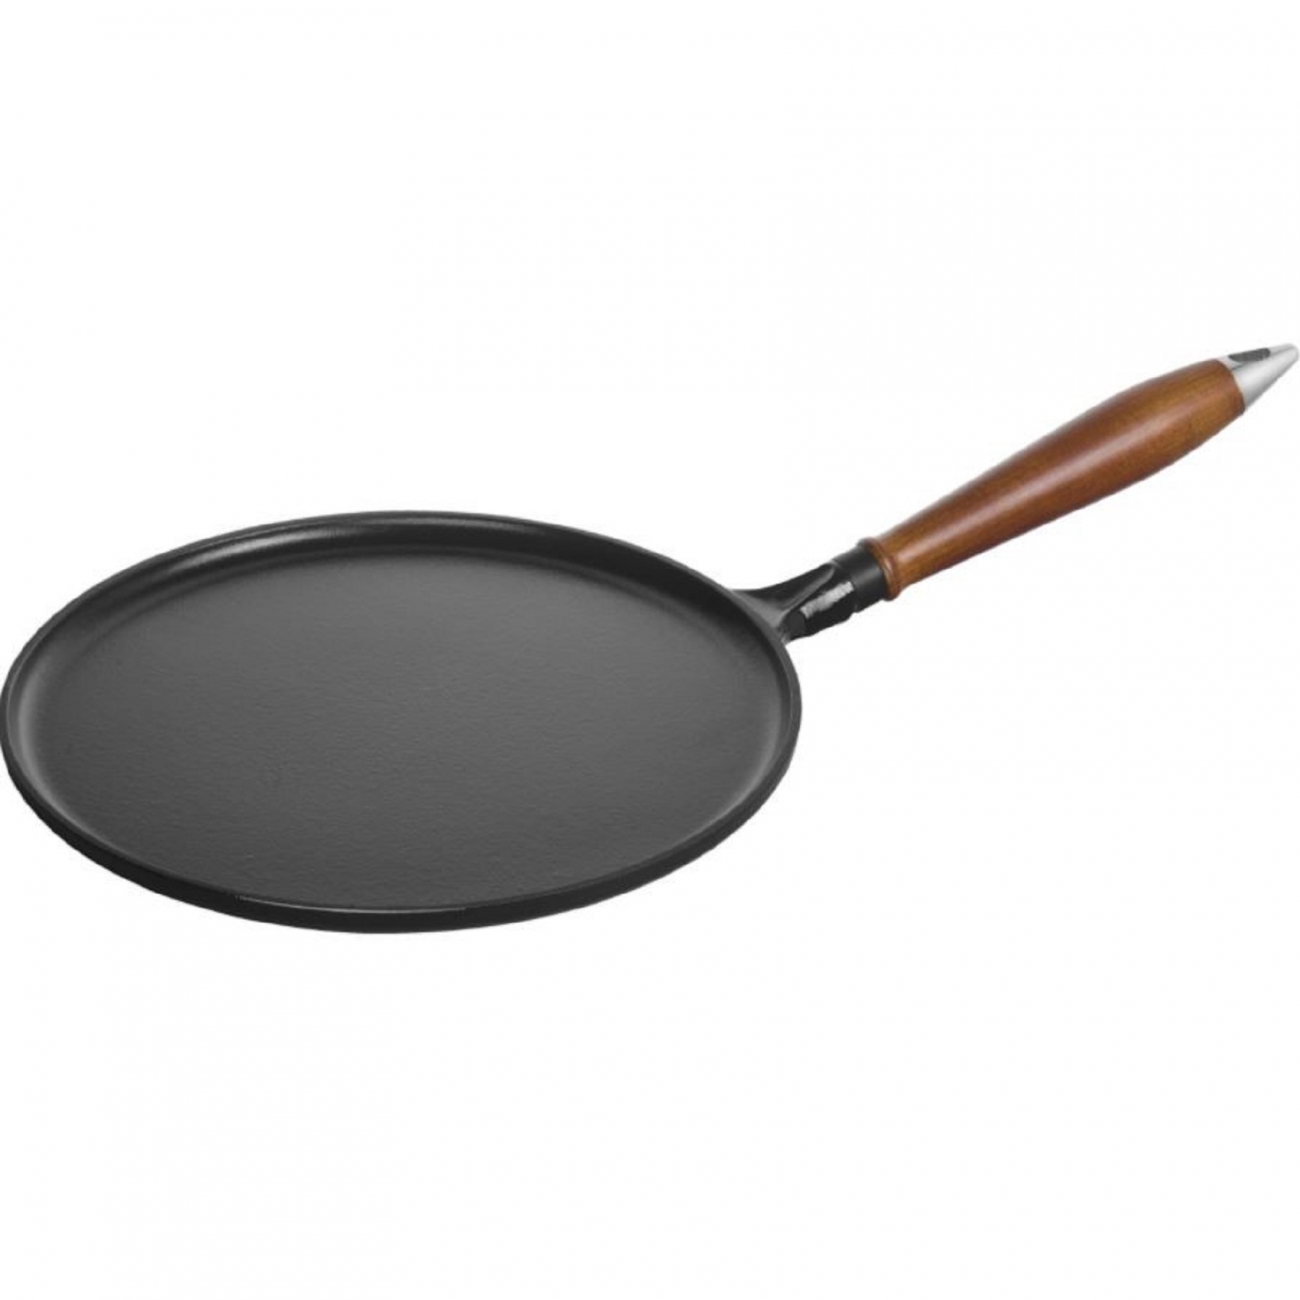 Staub Crepe Pan with wooden Handle 28 Black